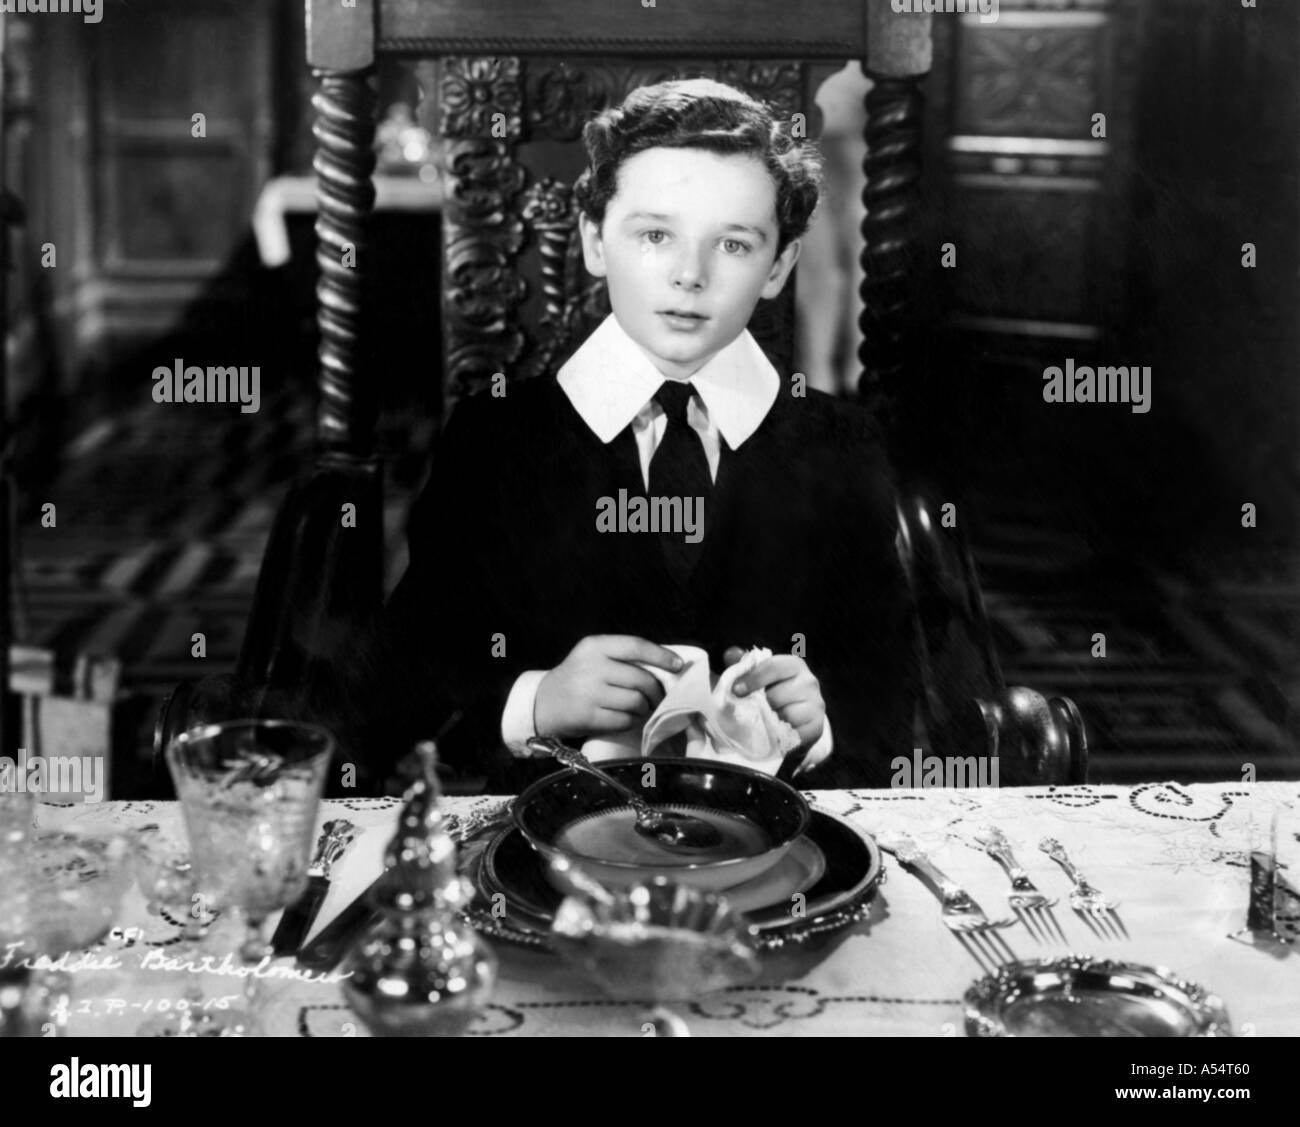 Petit lord Fauntleroy 1936 film avec Freddie Bartholomew Banque D'Images